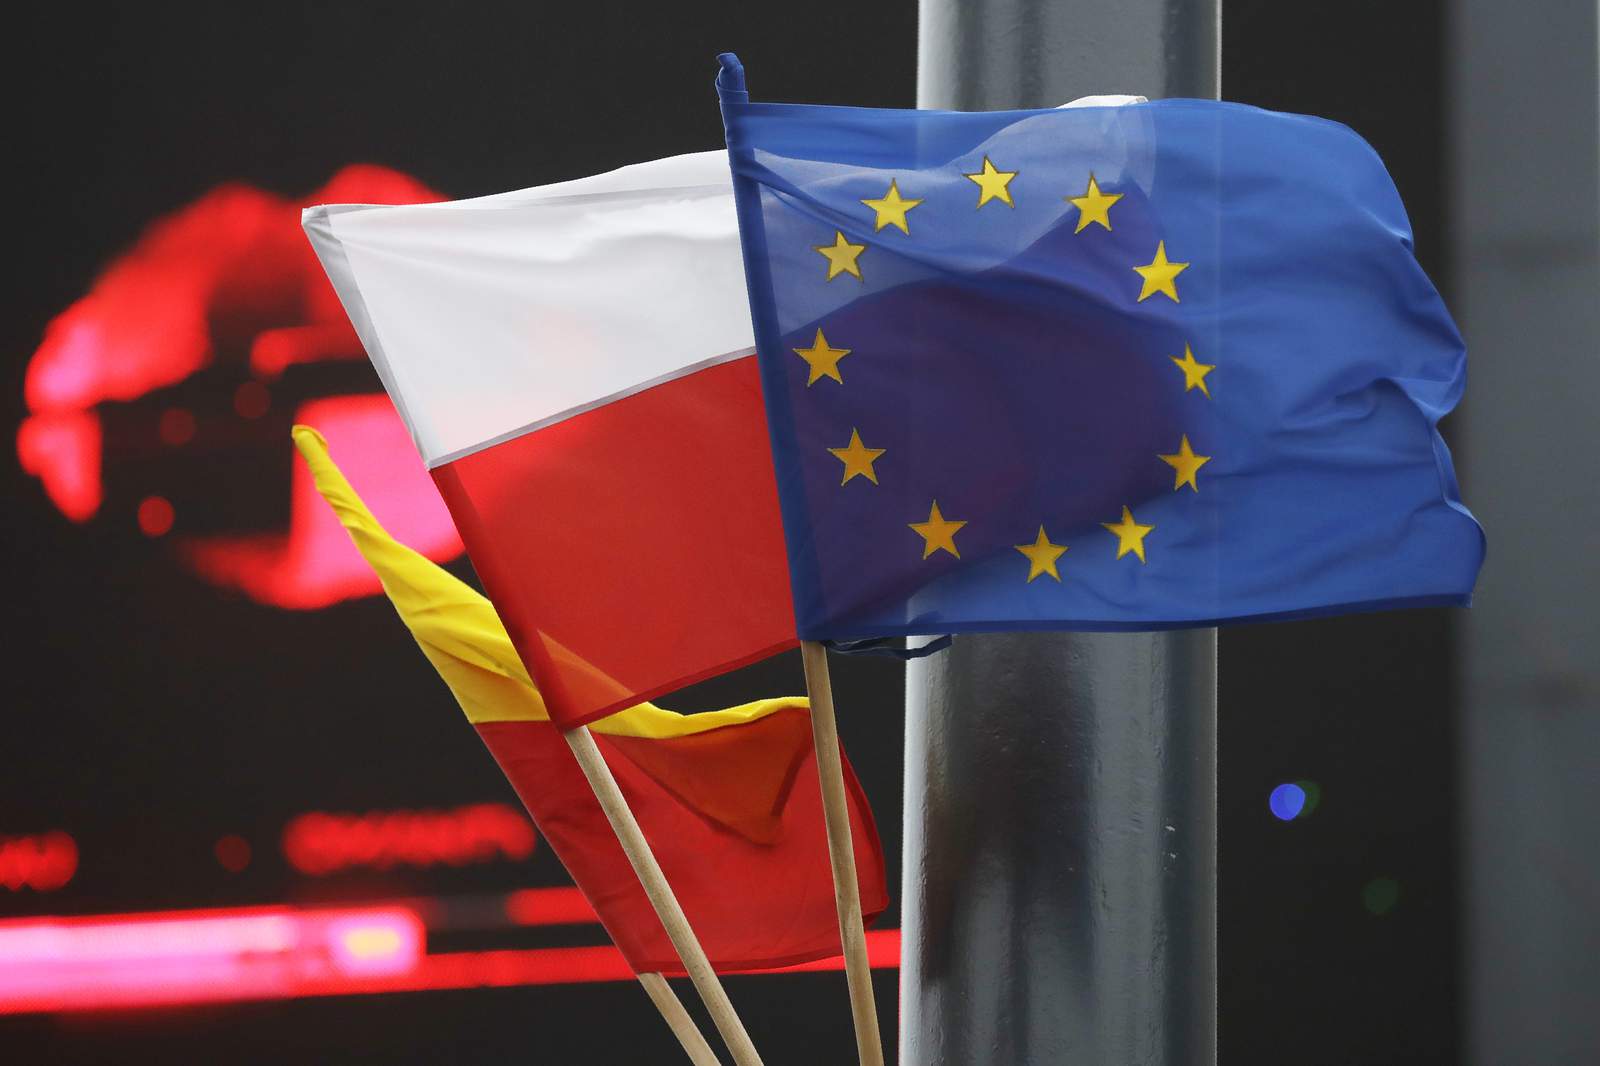 Poles voice fears of 'Polexit' as govt defies EU over budget